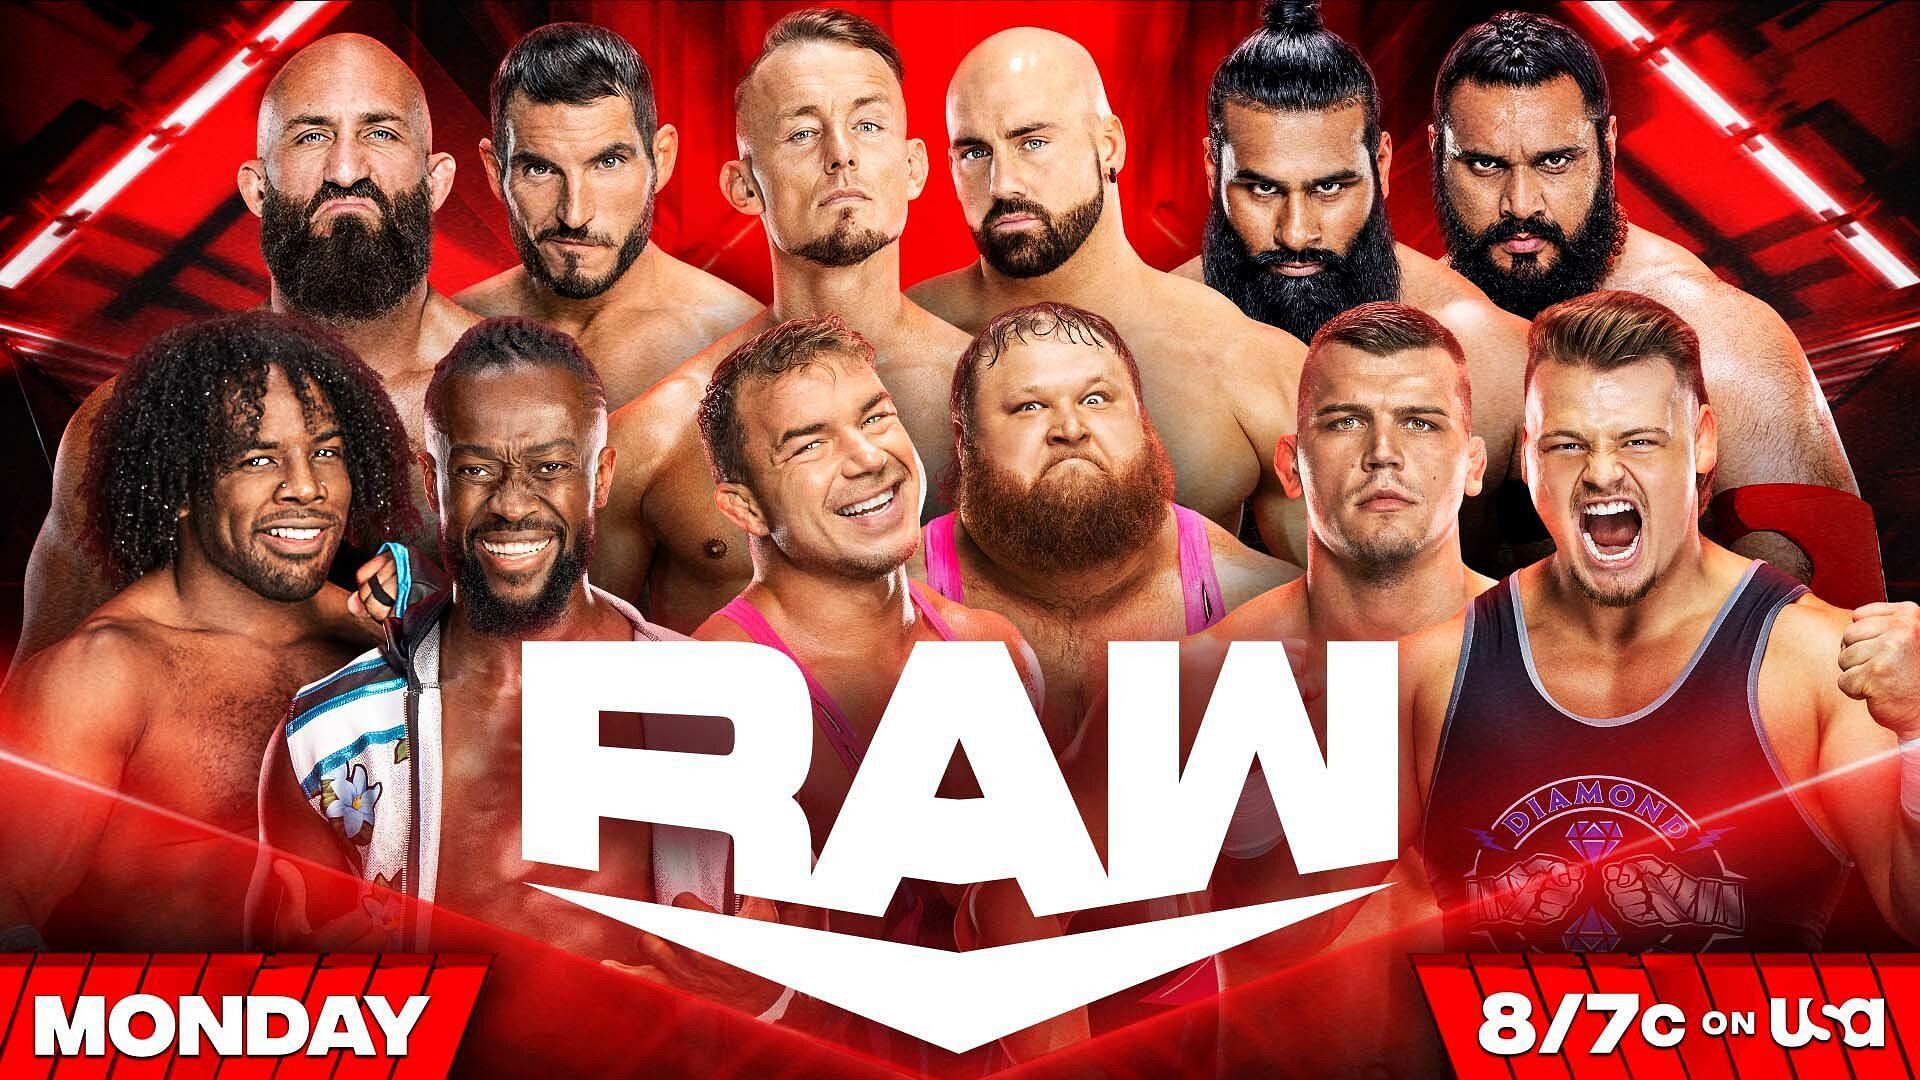 A major Tag Team Turmoil Match will take place on WWE RAW